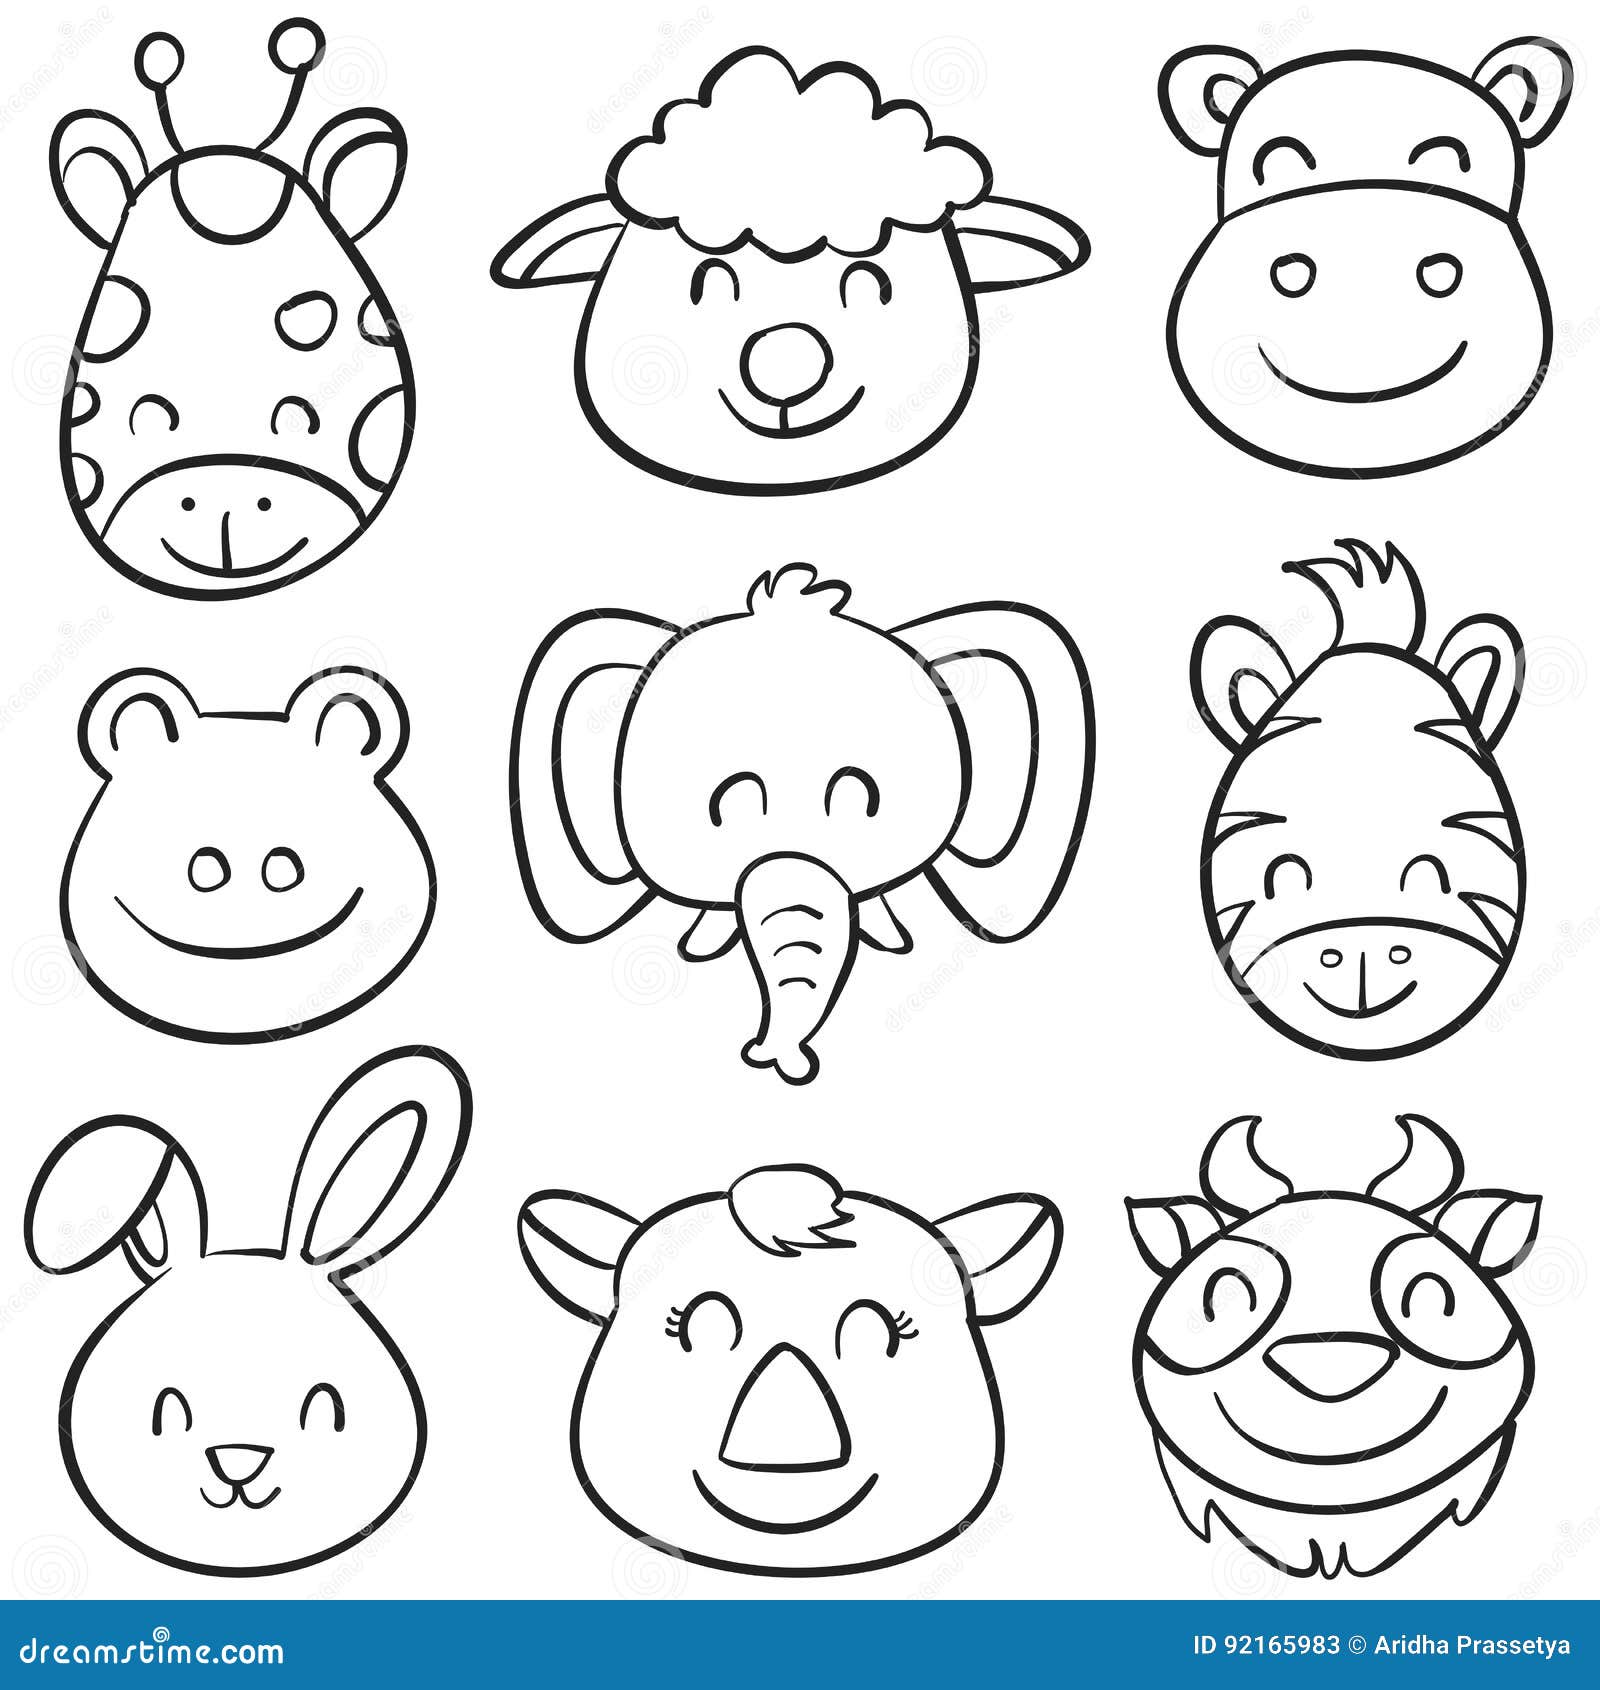 Animal Head Hand Draw Doodles Stock Vector - Illustration of cartoon ...